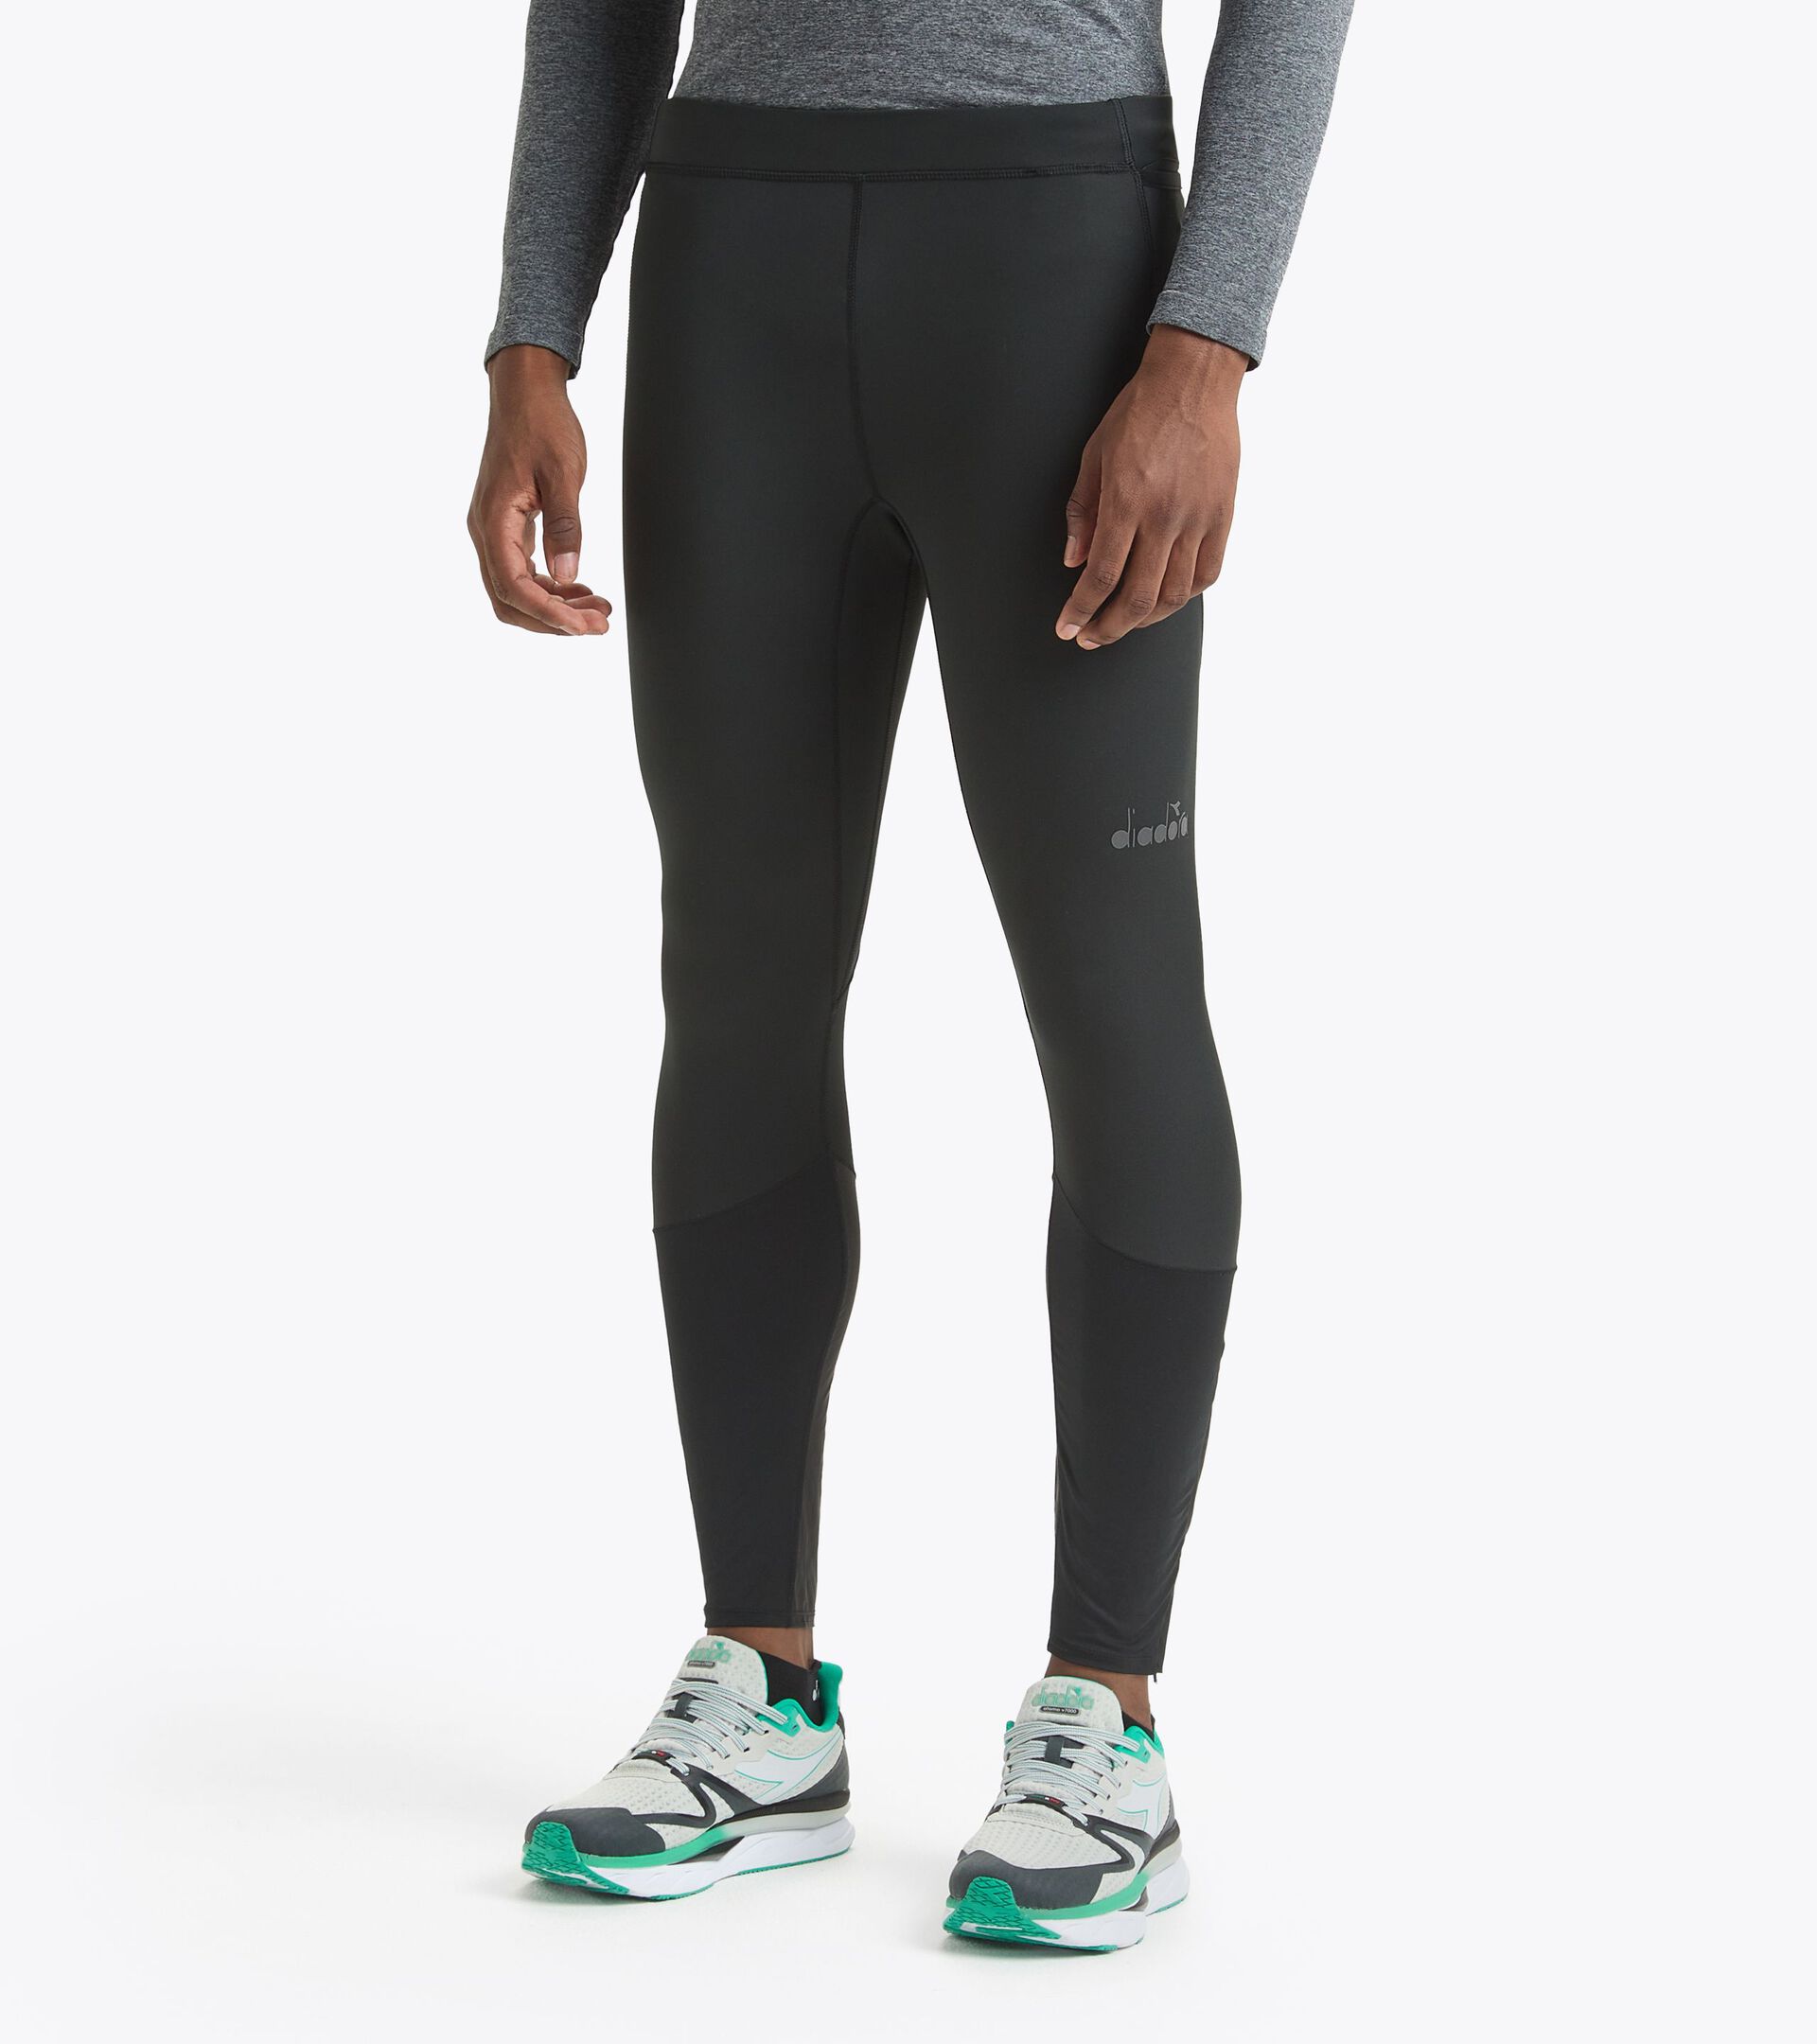 RUN TIGHTS WINTER PROTECTION Sports leggings - Men - Diadora Online Store TR